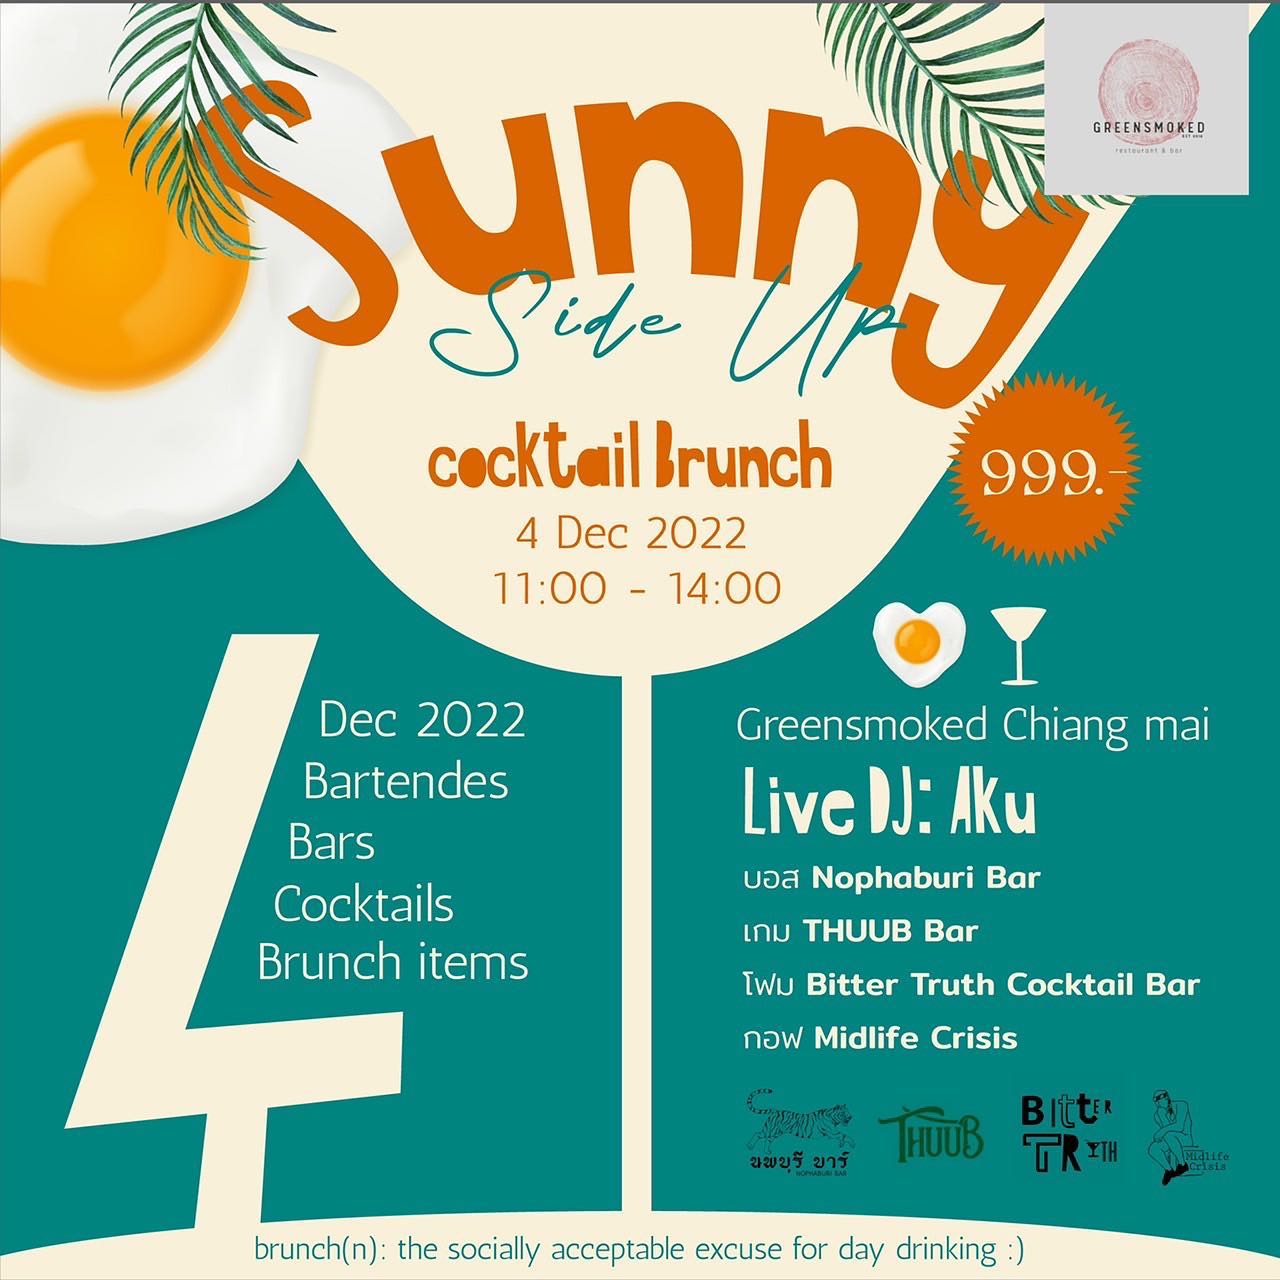 Sunny Side Up Cocktail Brunch ใน เชียงใหม่ - ธันวาคม 2565